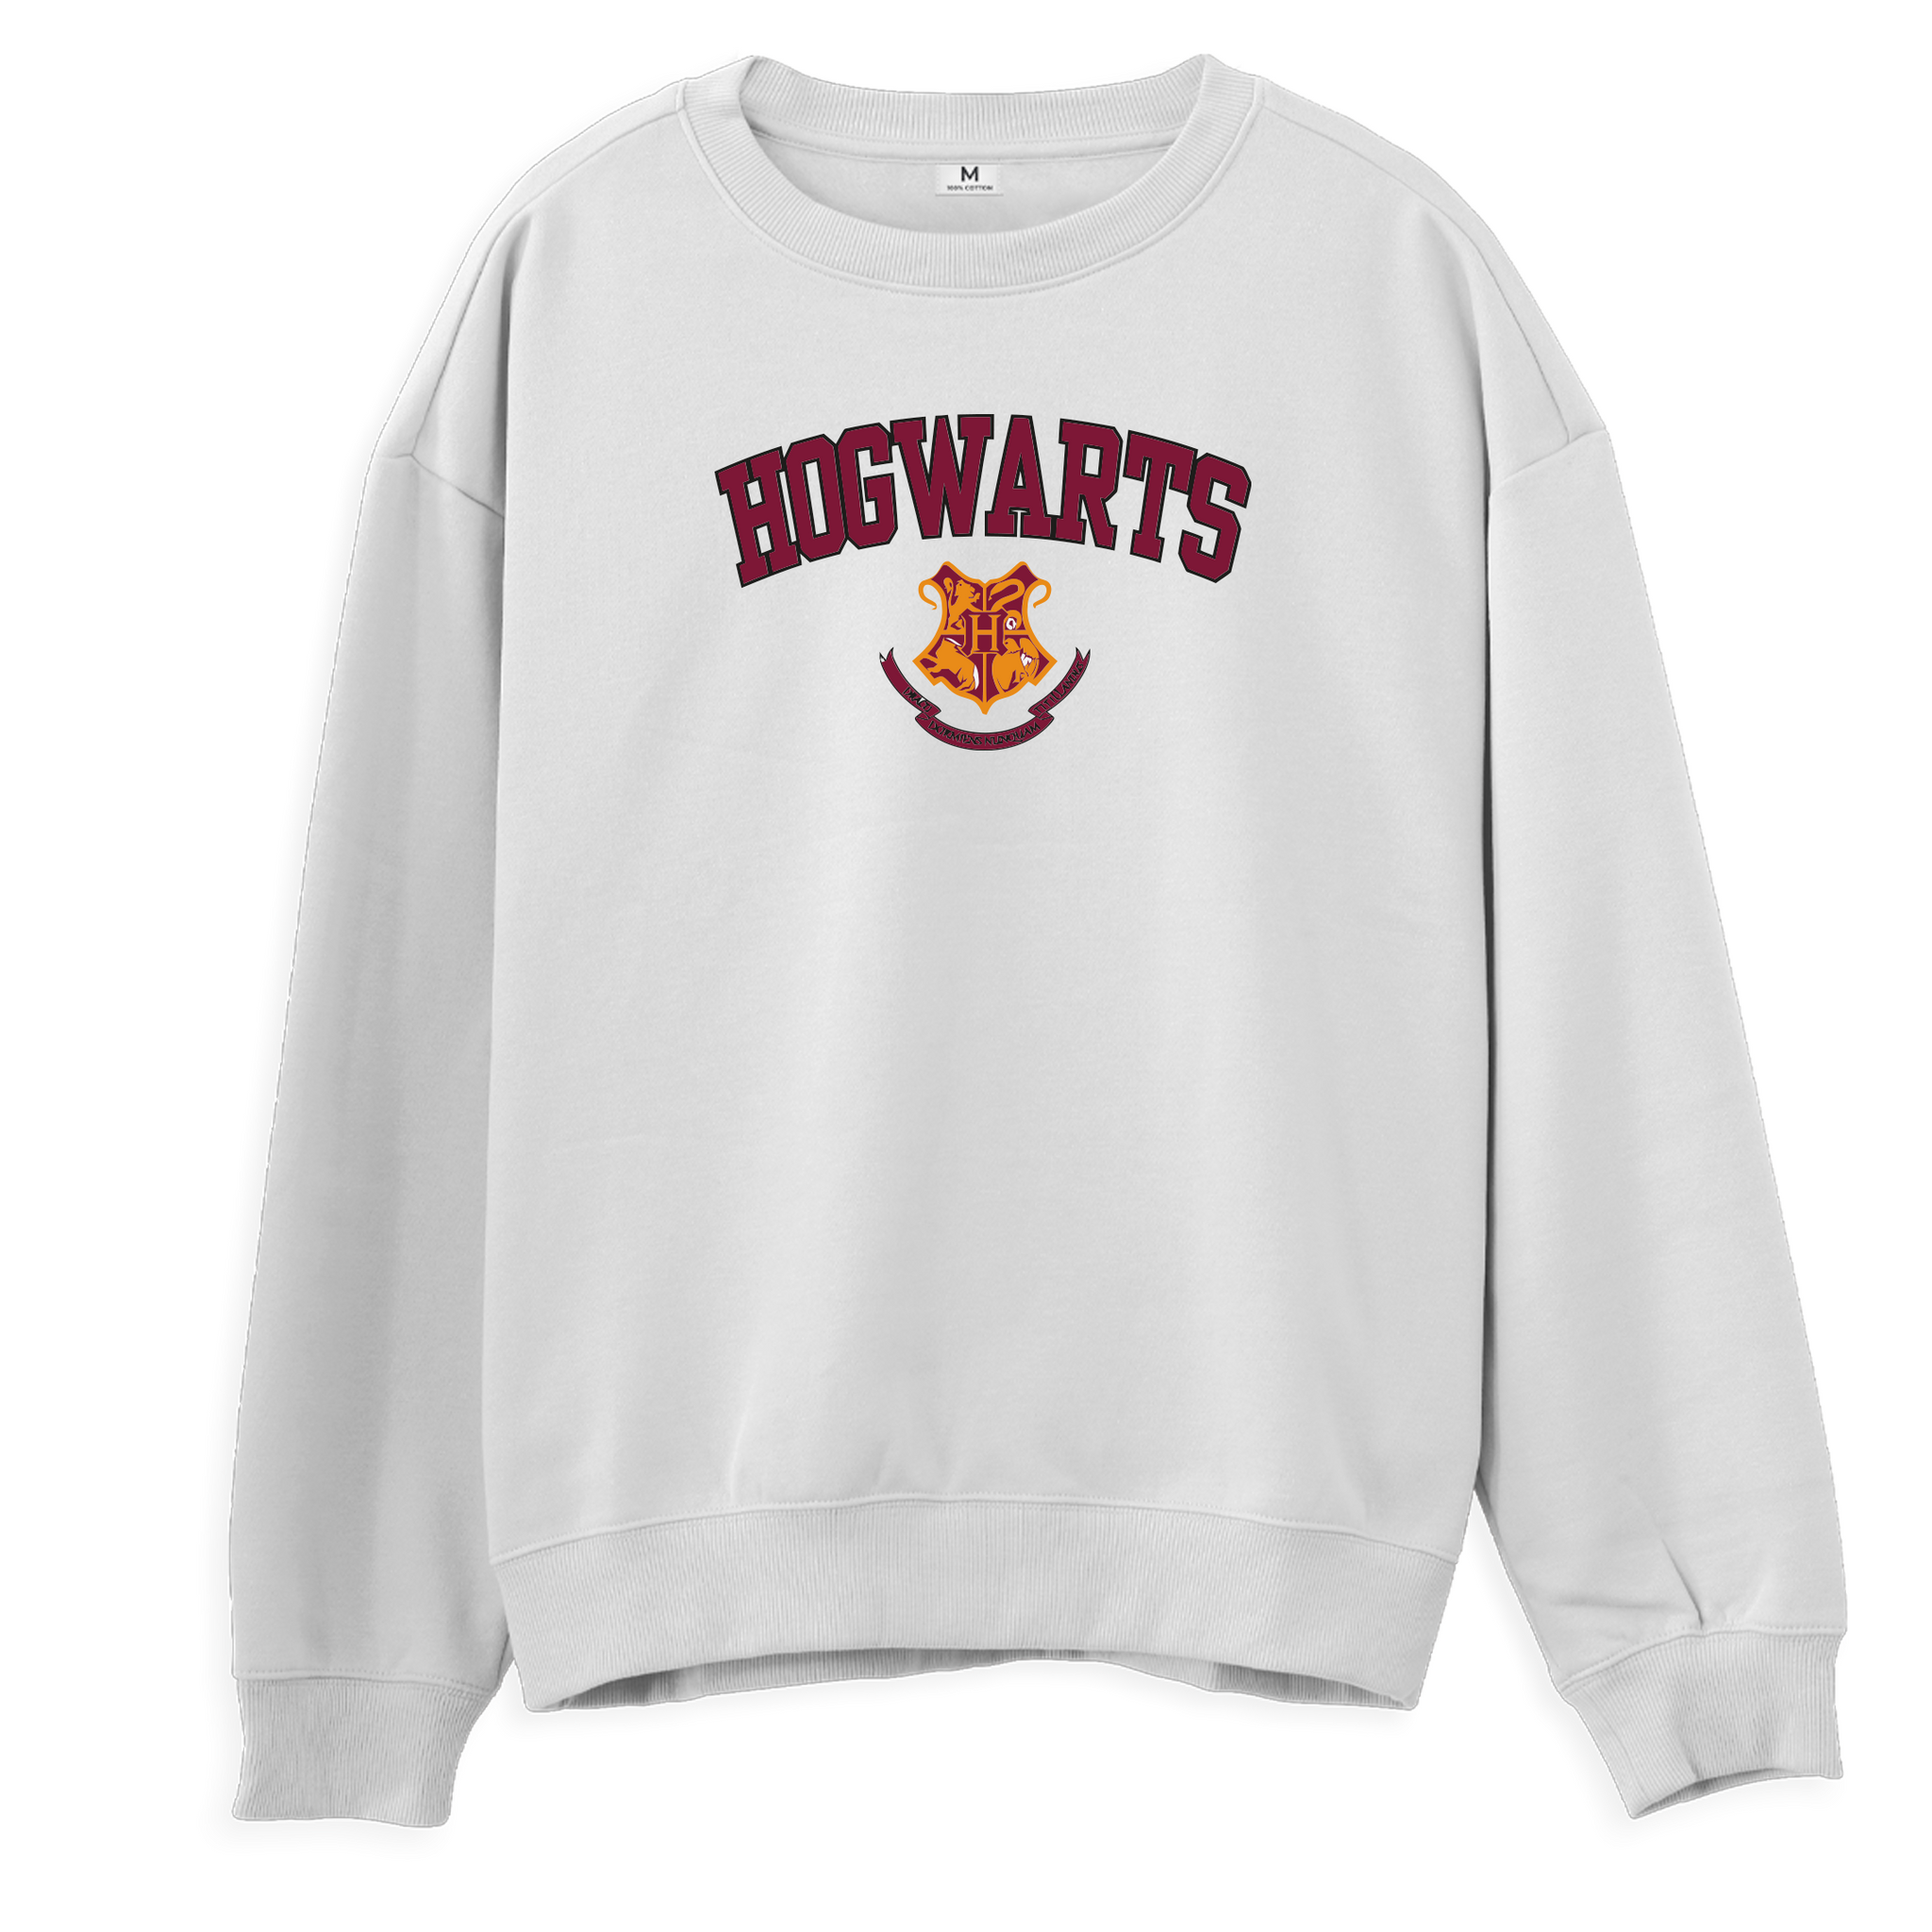 Hogwarts - Sweatshirt -Regular